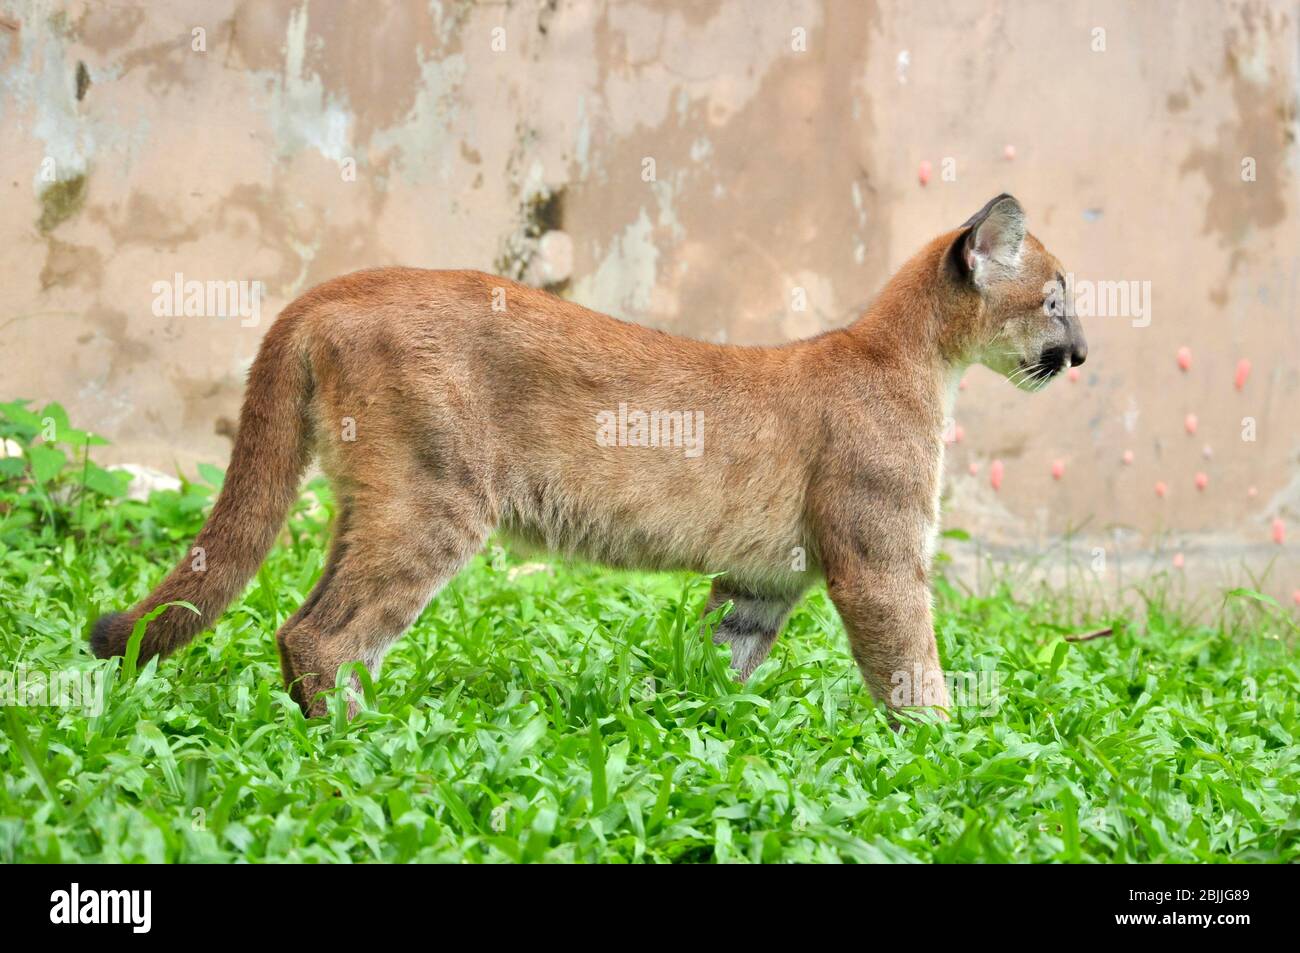 Baby florida panther puma felis hi-res stock photography and images - Alamy